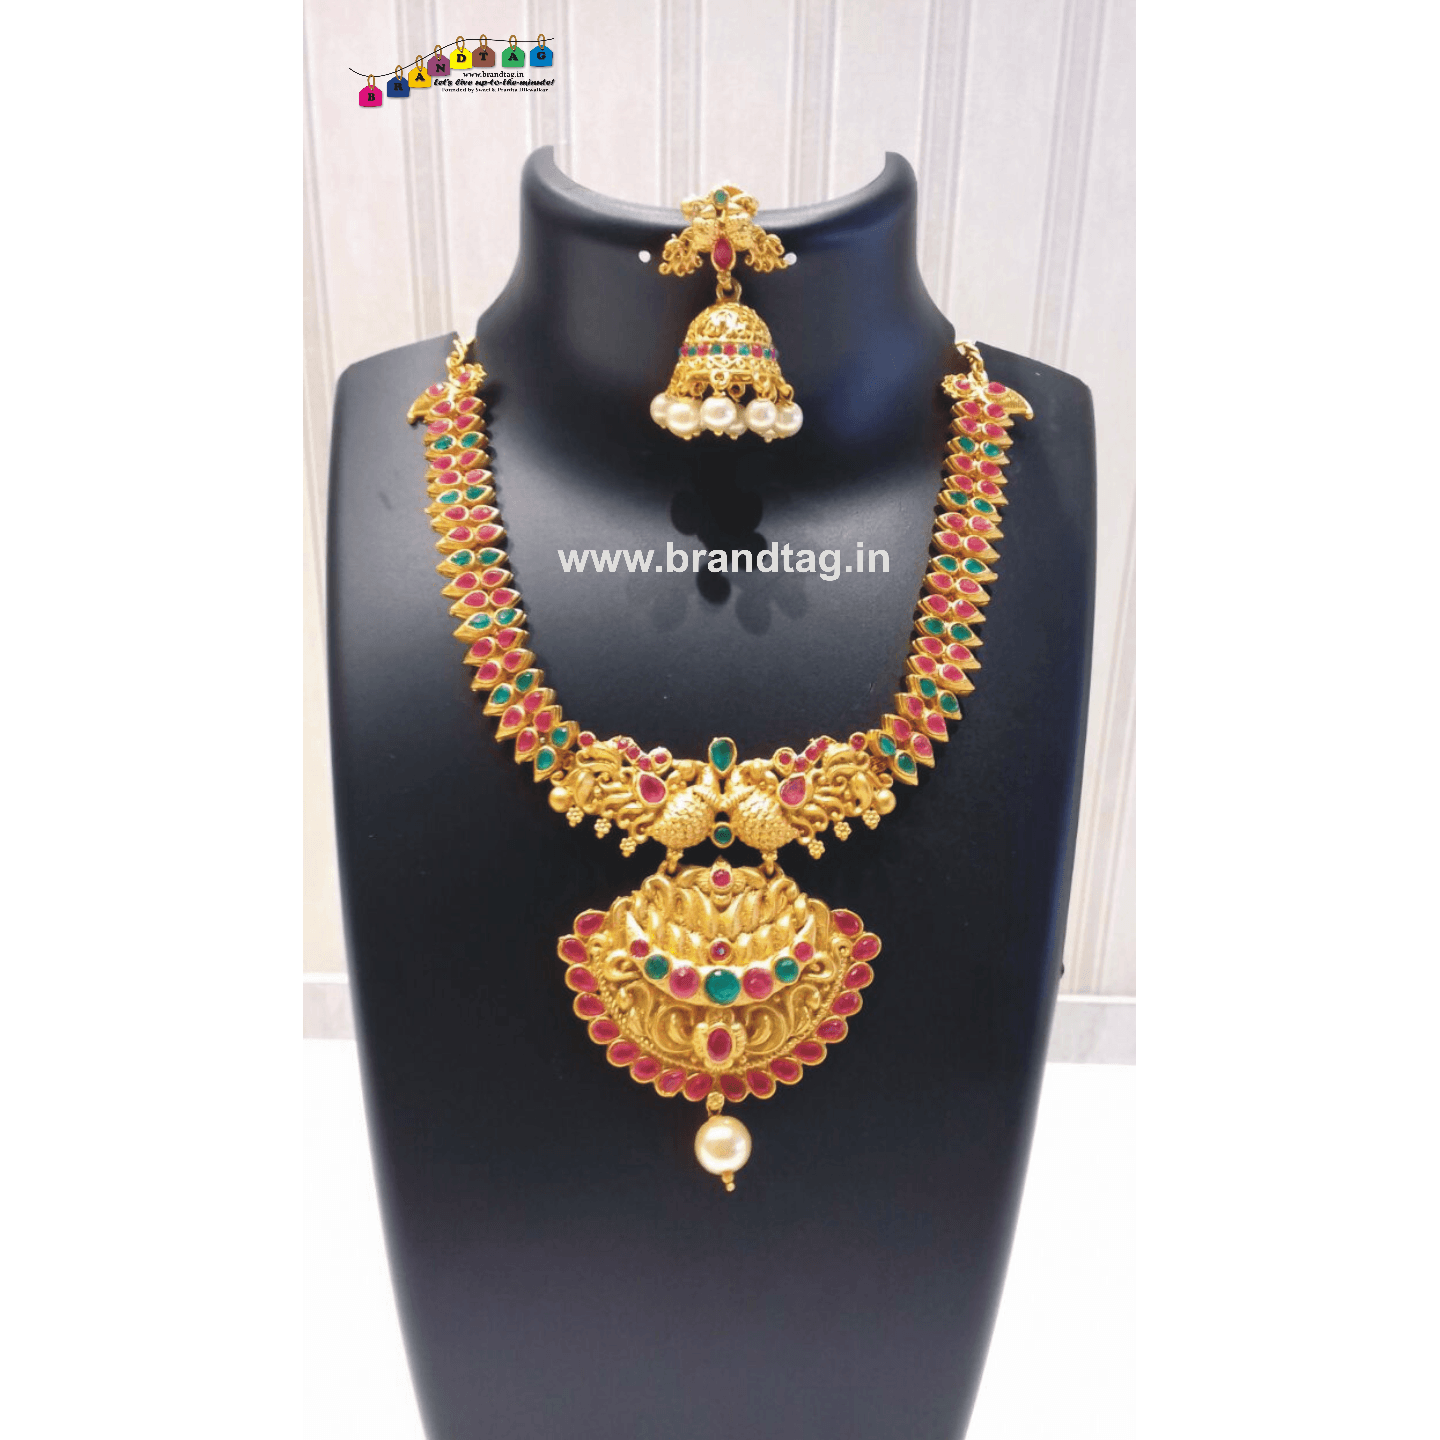 Diwali Collection - Ethnic Golden Necklace set!